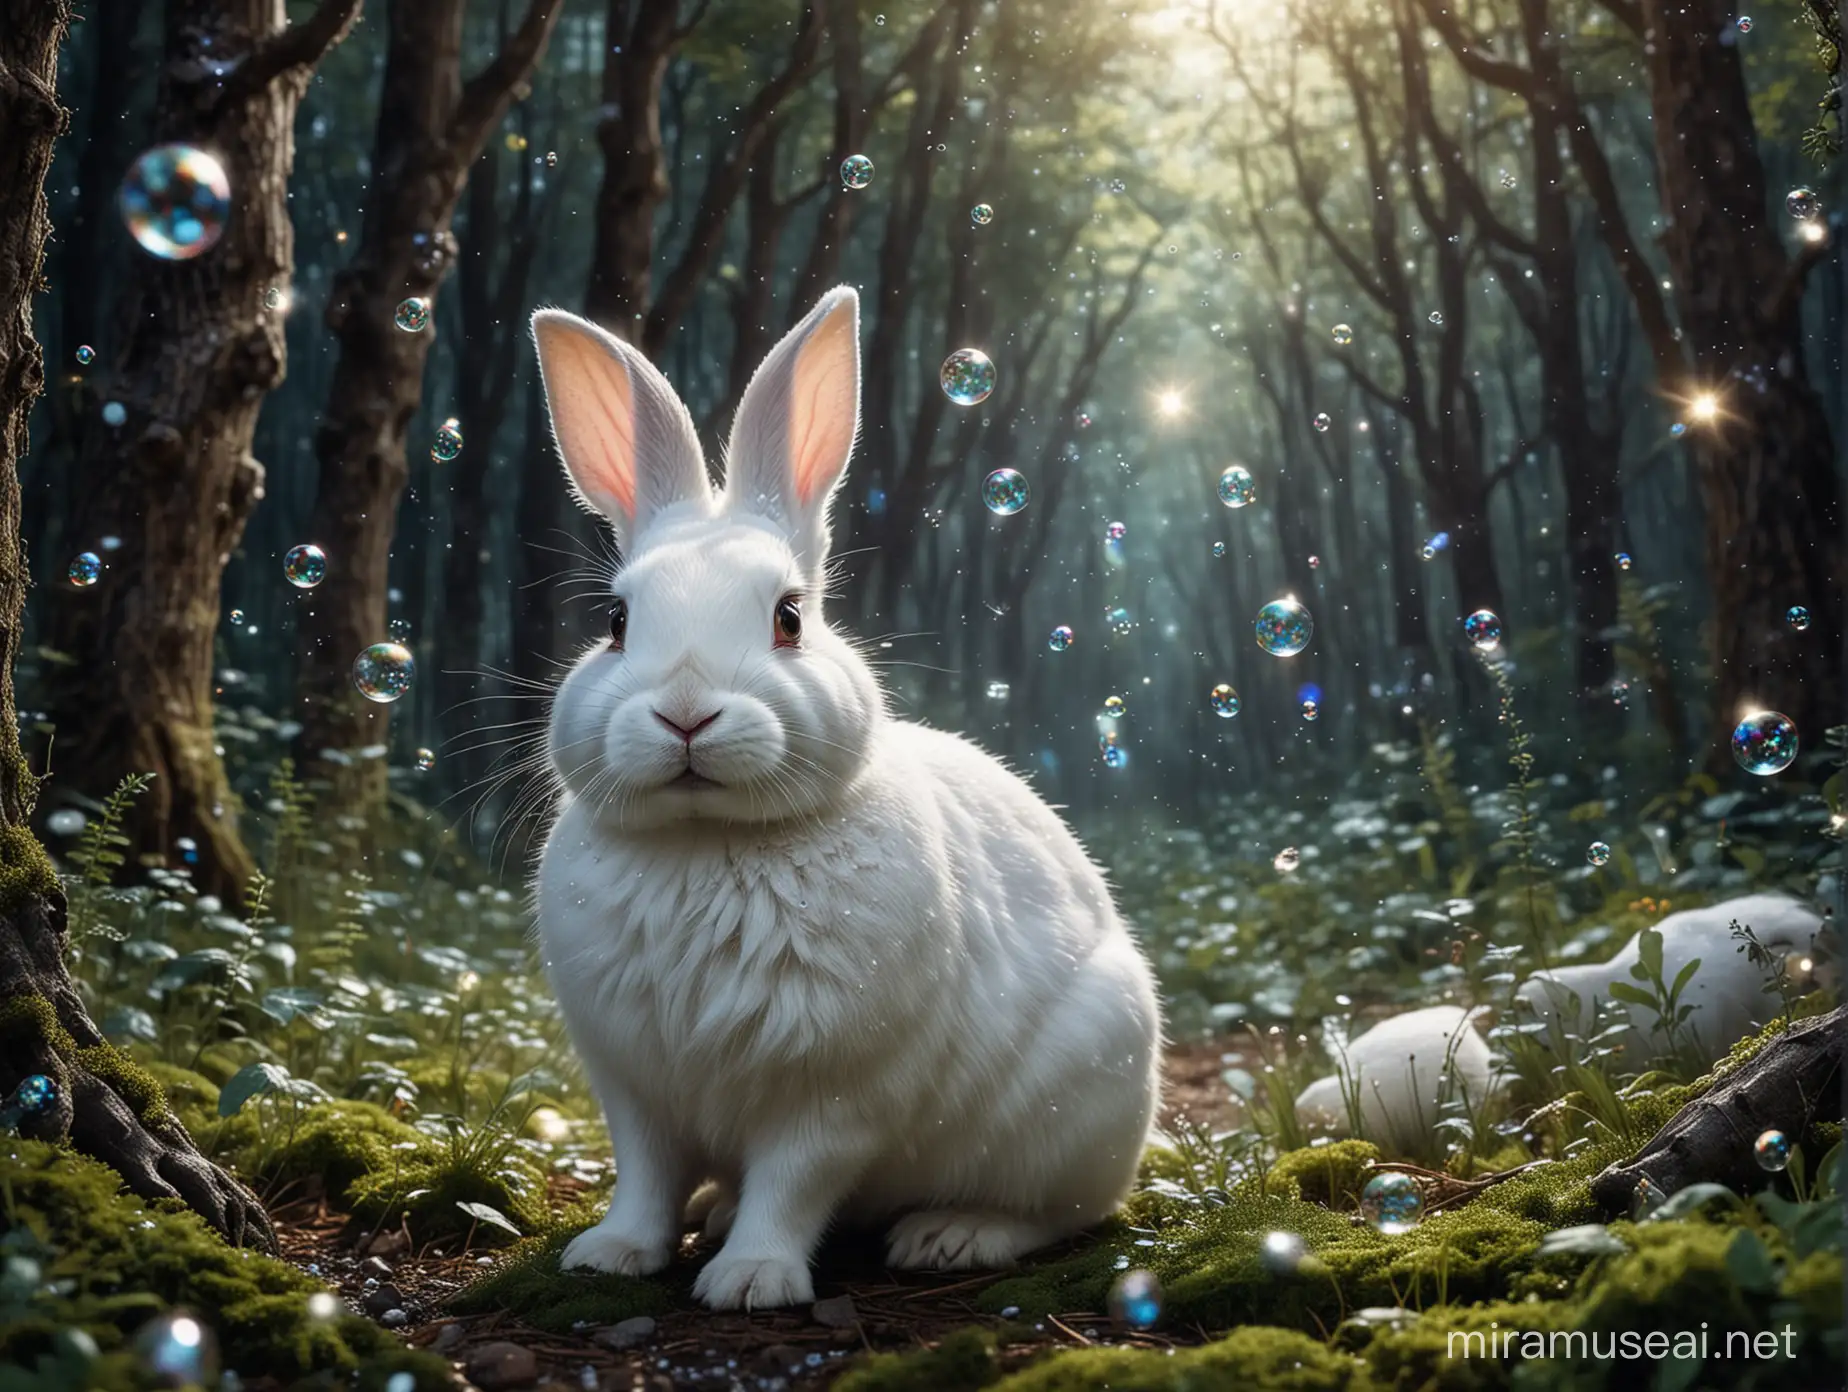 Enchanting Night White Rabbit Amidst Glittering Forest